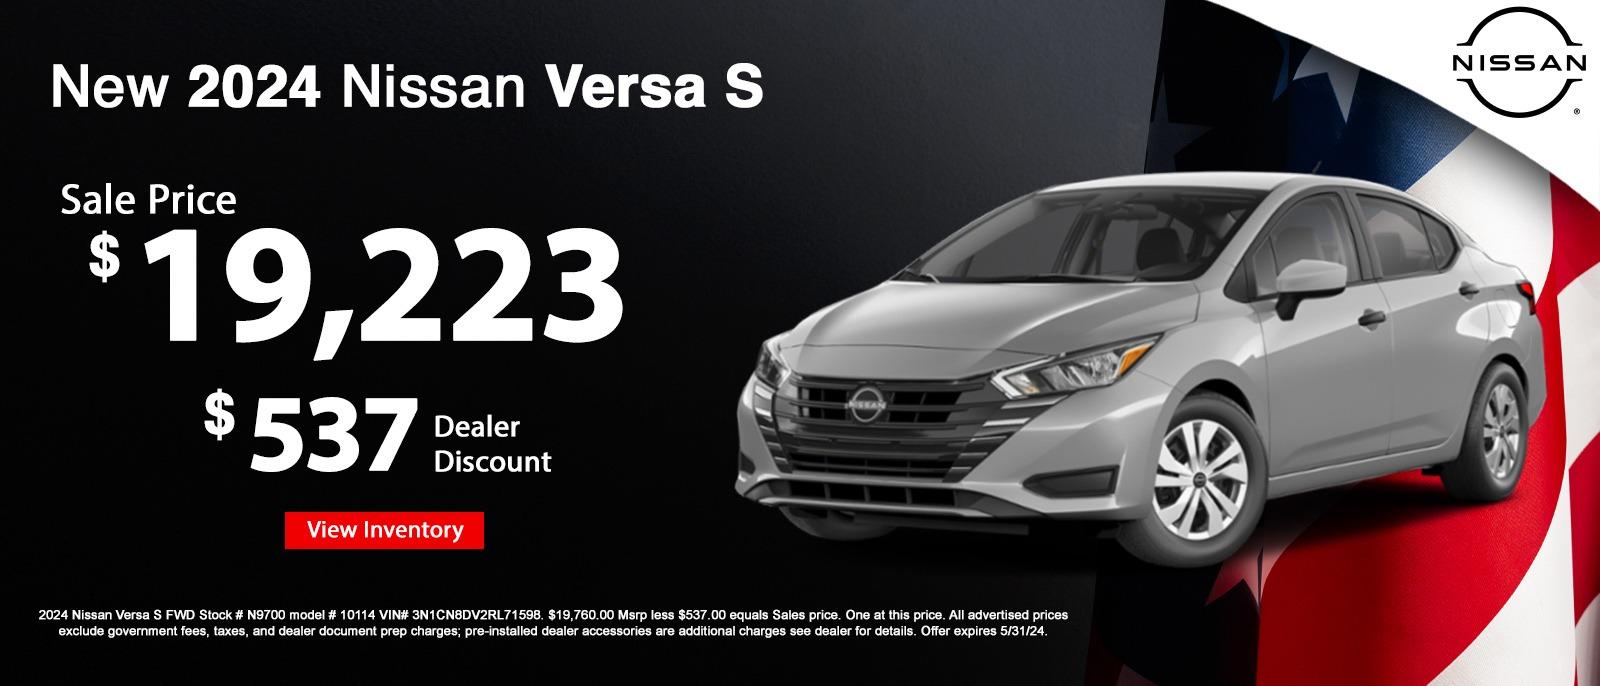 New 2024 Nissan Versa S
Sales price $19,223
$537 dealer discount